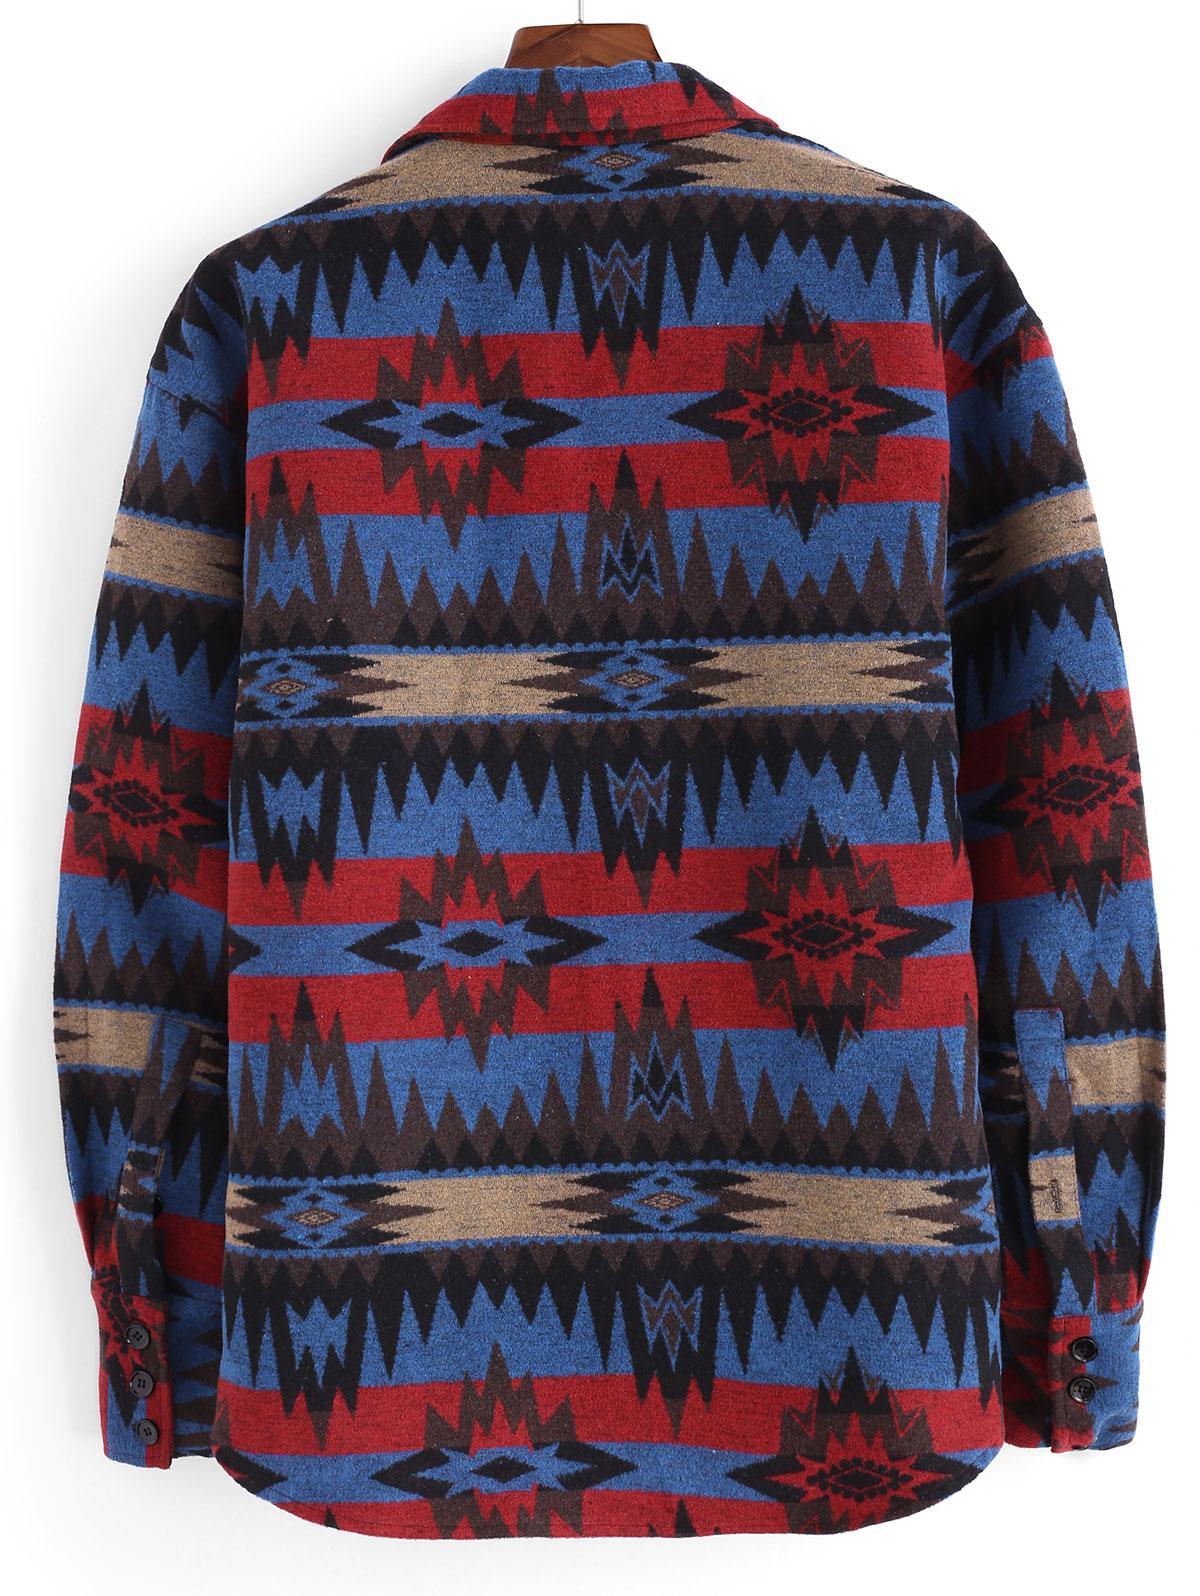 Zaful Zip Streetwear Geometric Aztec Printed Rib-knit Trim Jacket Xl Multi C for Men Mens Clothing Jackets Casual jackets 